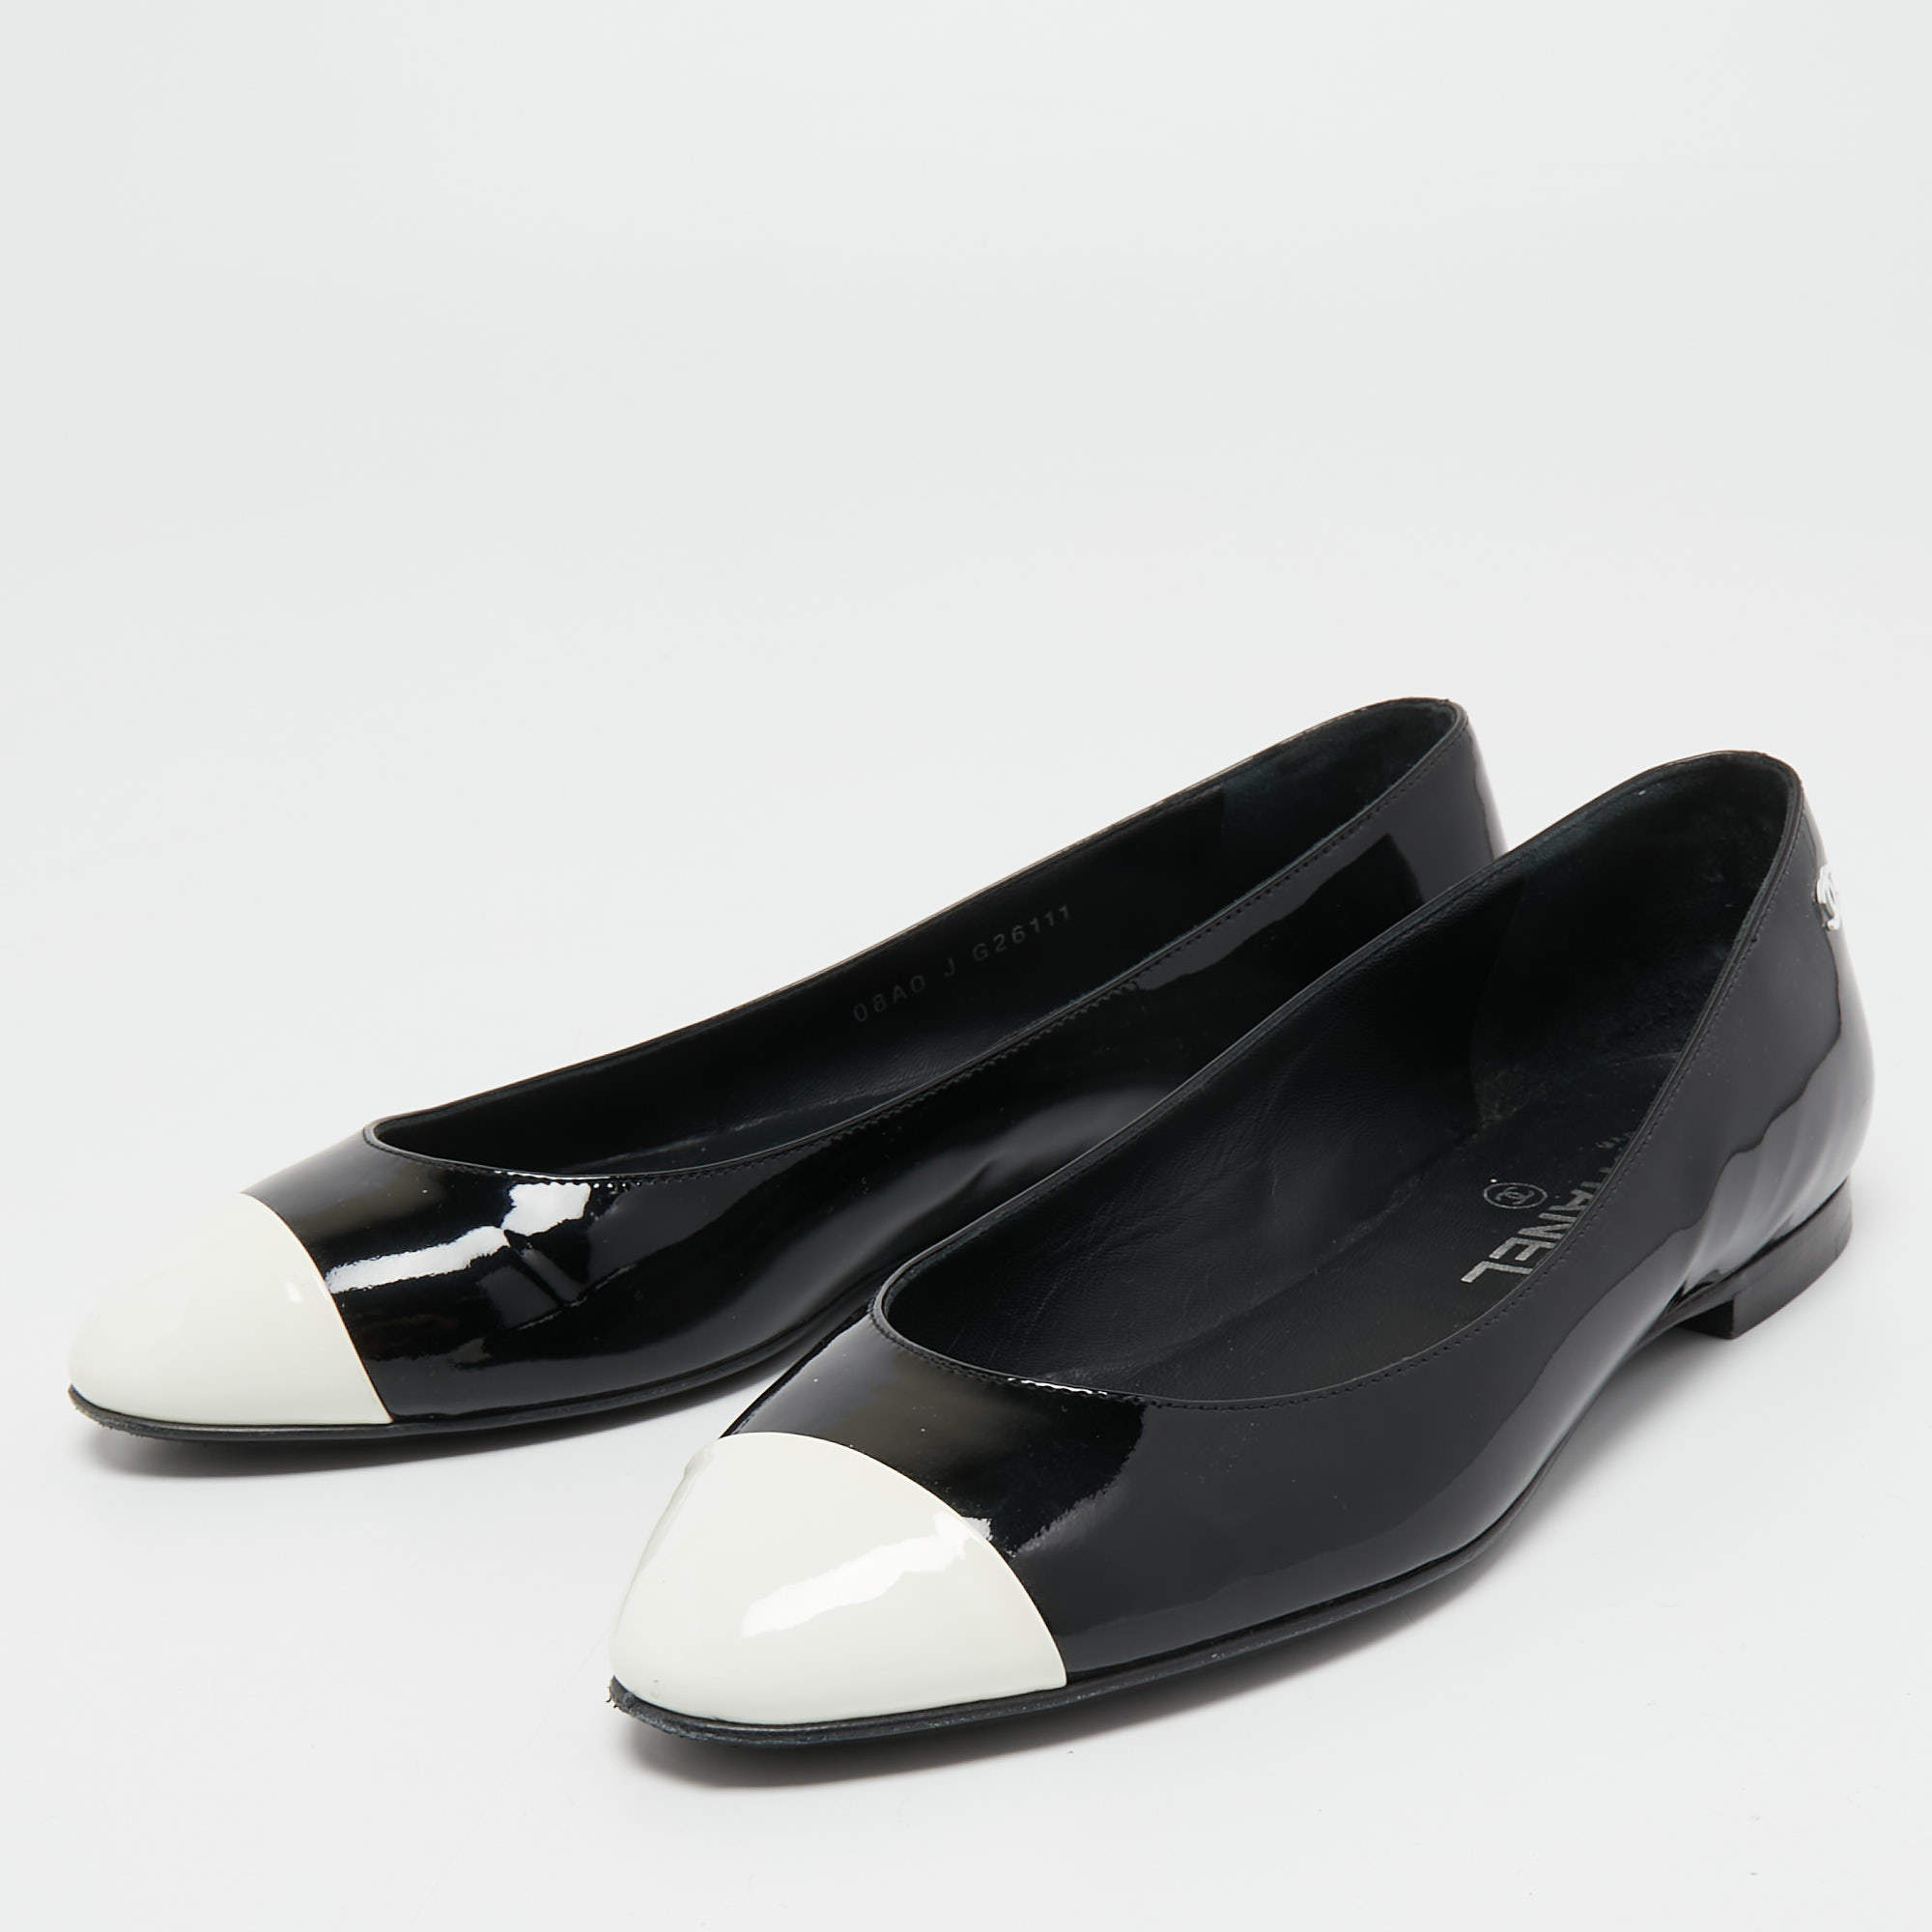 Chanel Black/White Patent Leather Cap Toe CC Ballet Flats Size 38